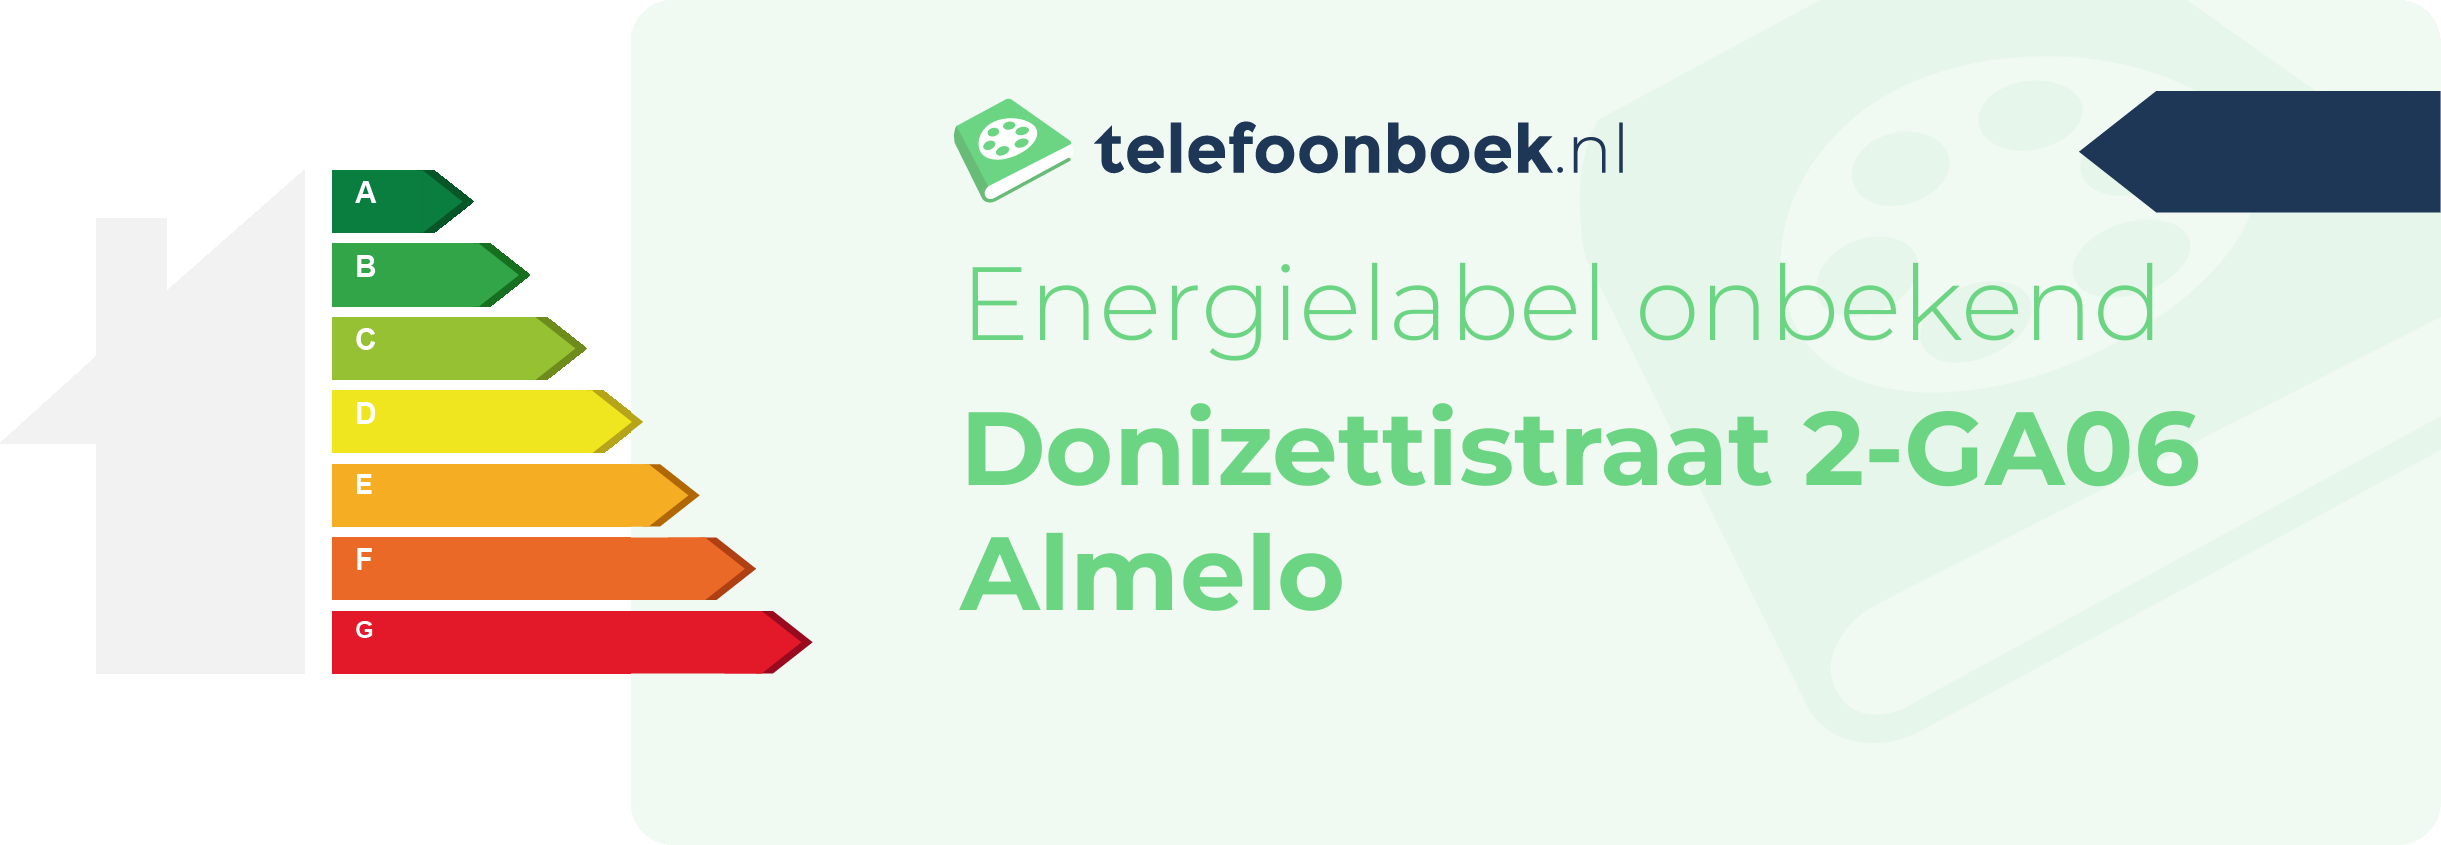 Energielabel Donizettistraat 2-GA06 Almelo